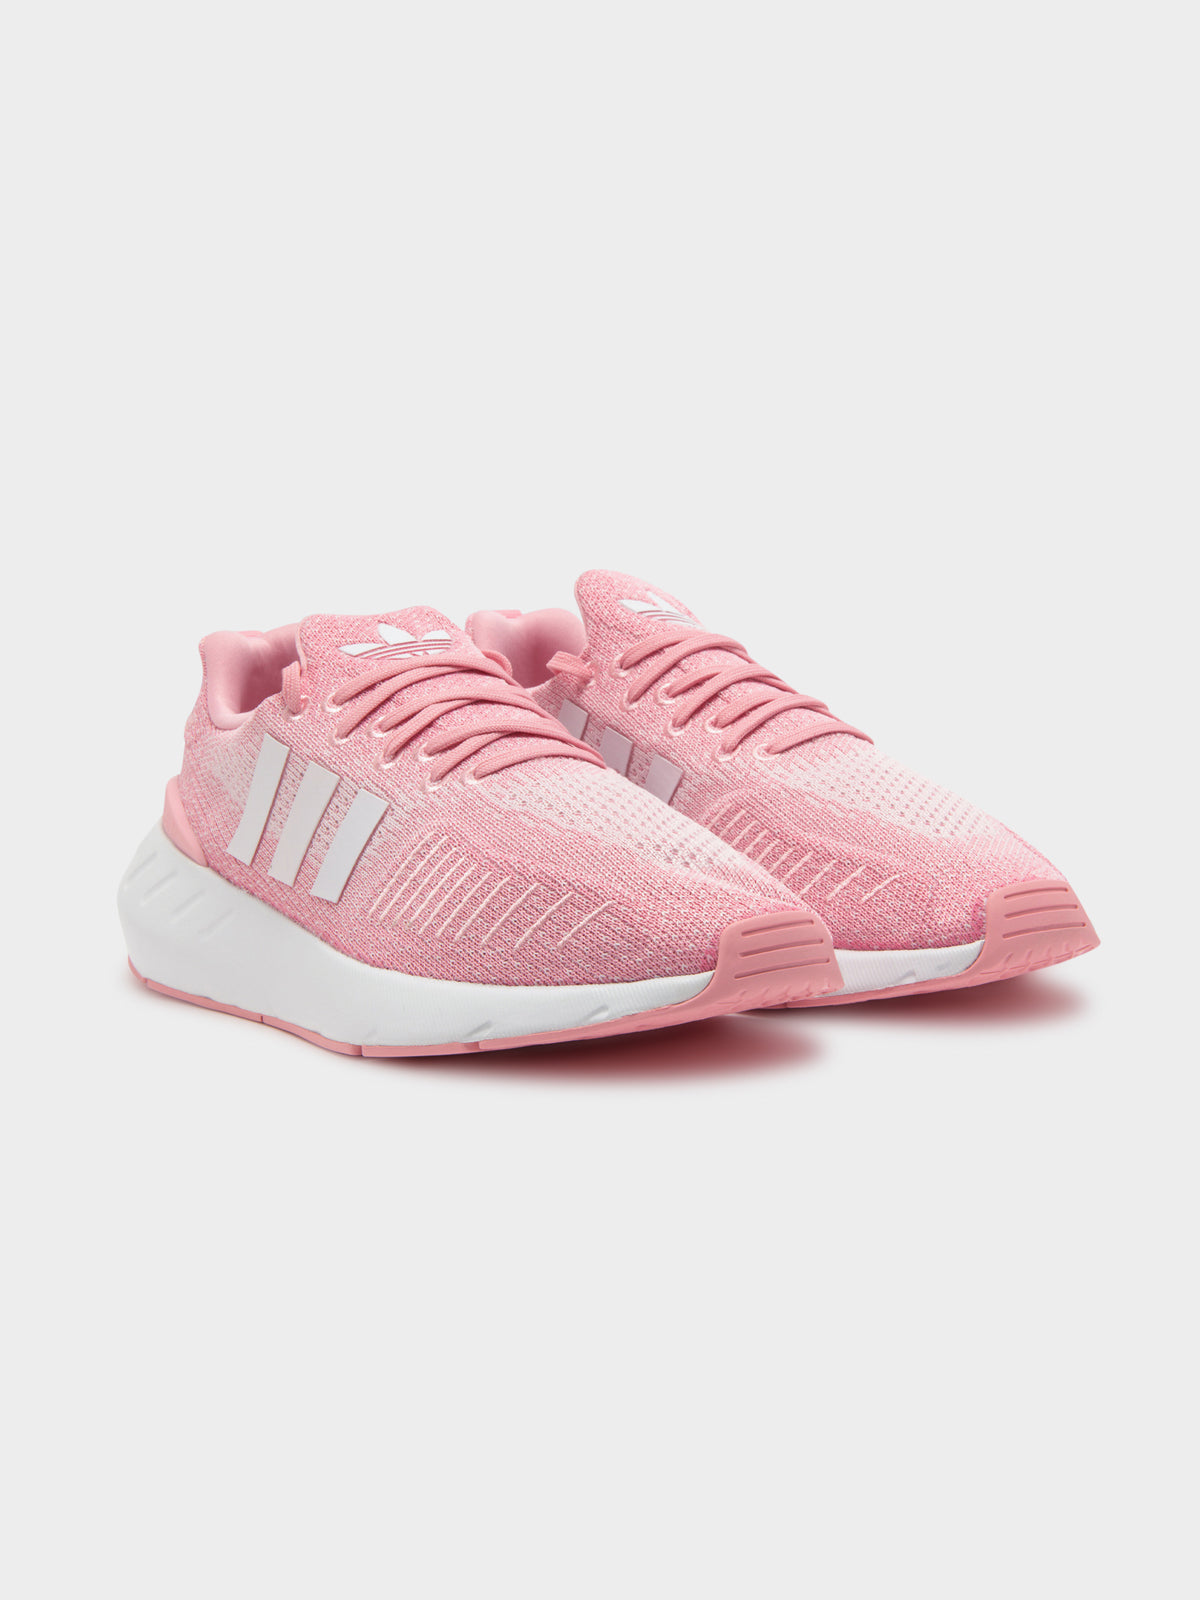 Womens Swift Run 22 Shoes in Light Pink